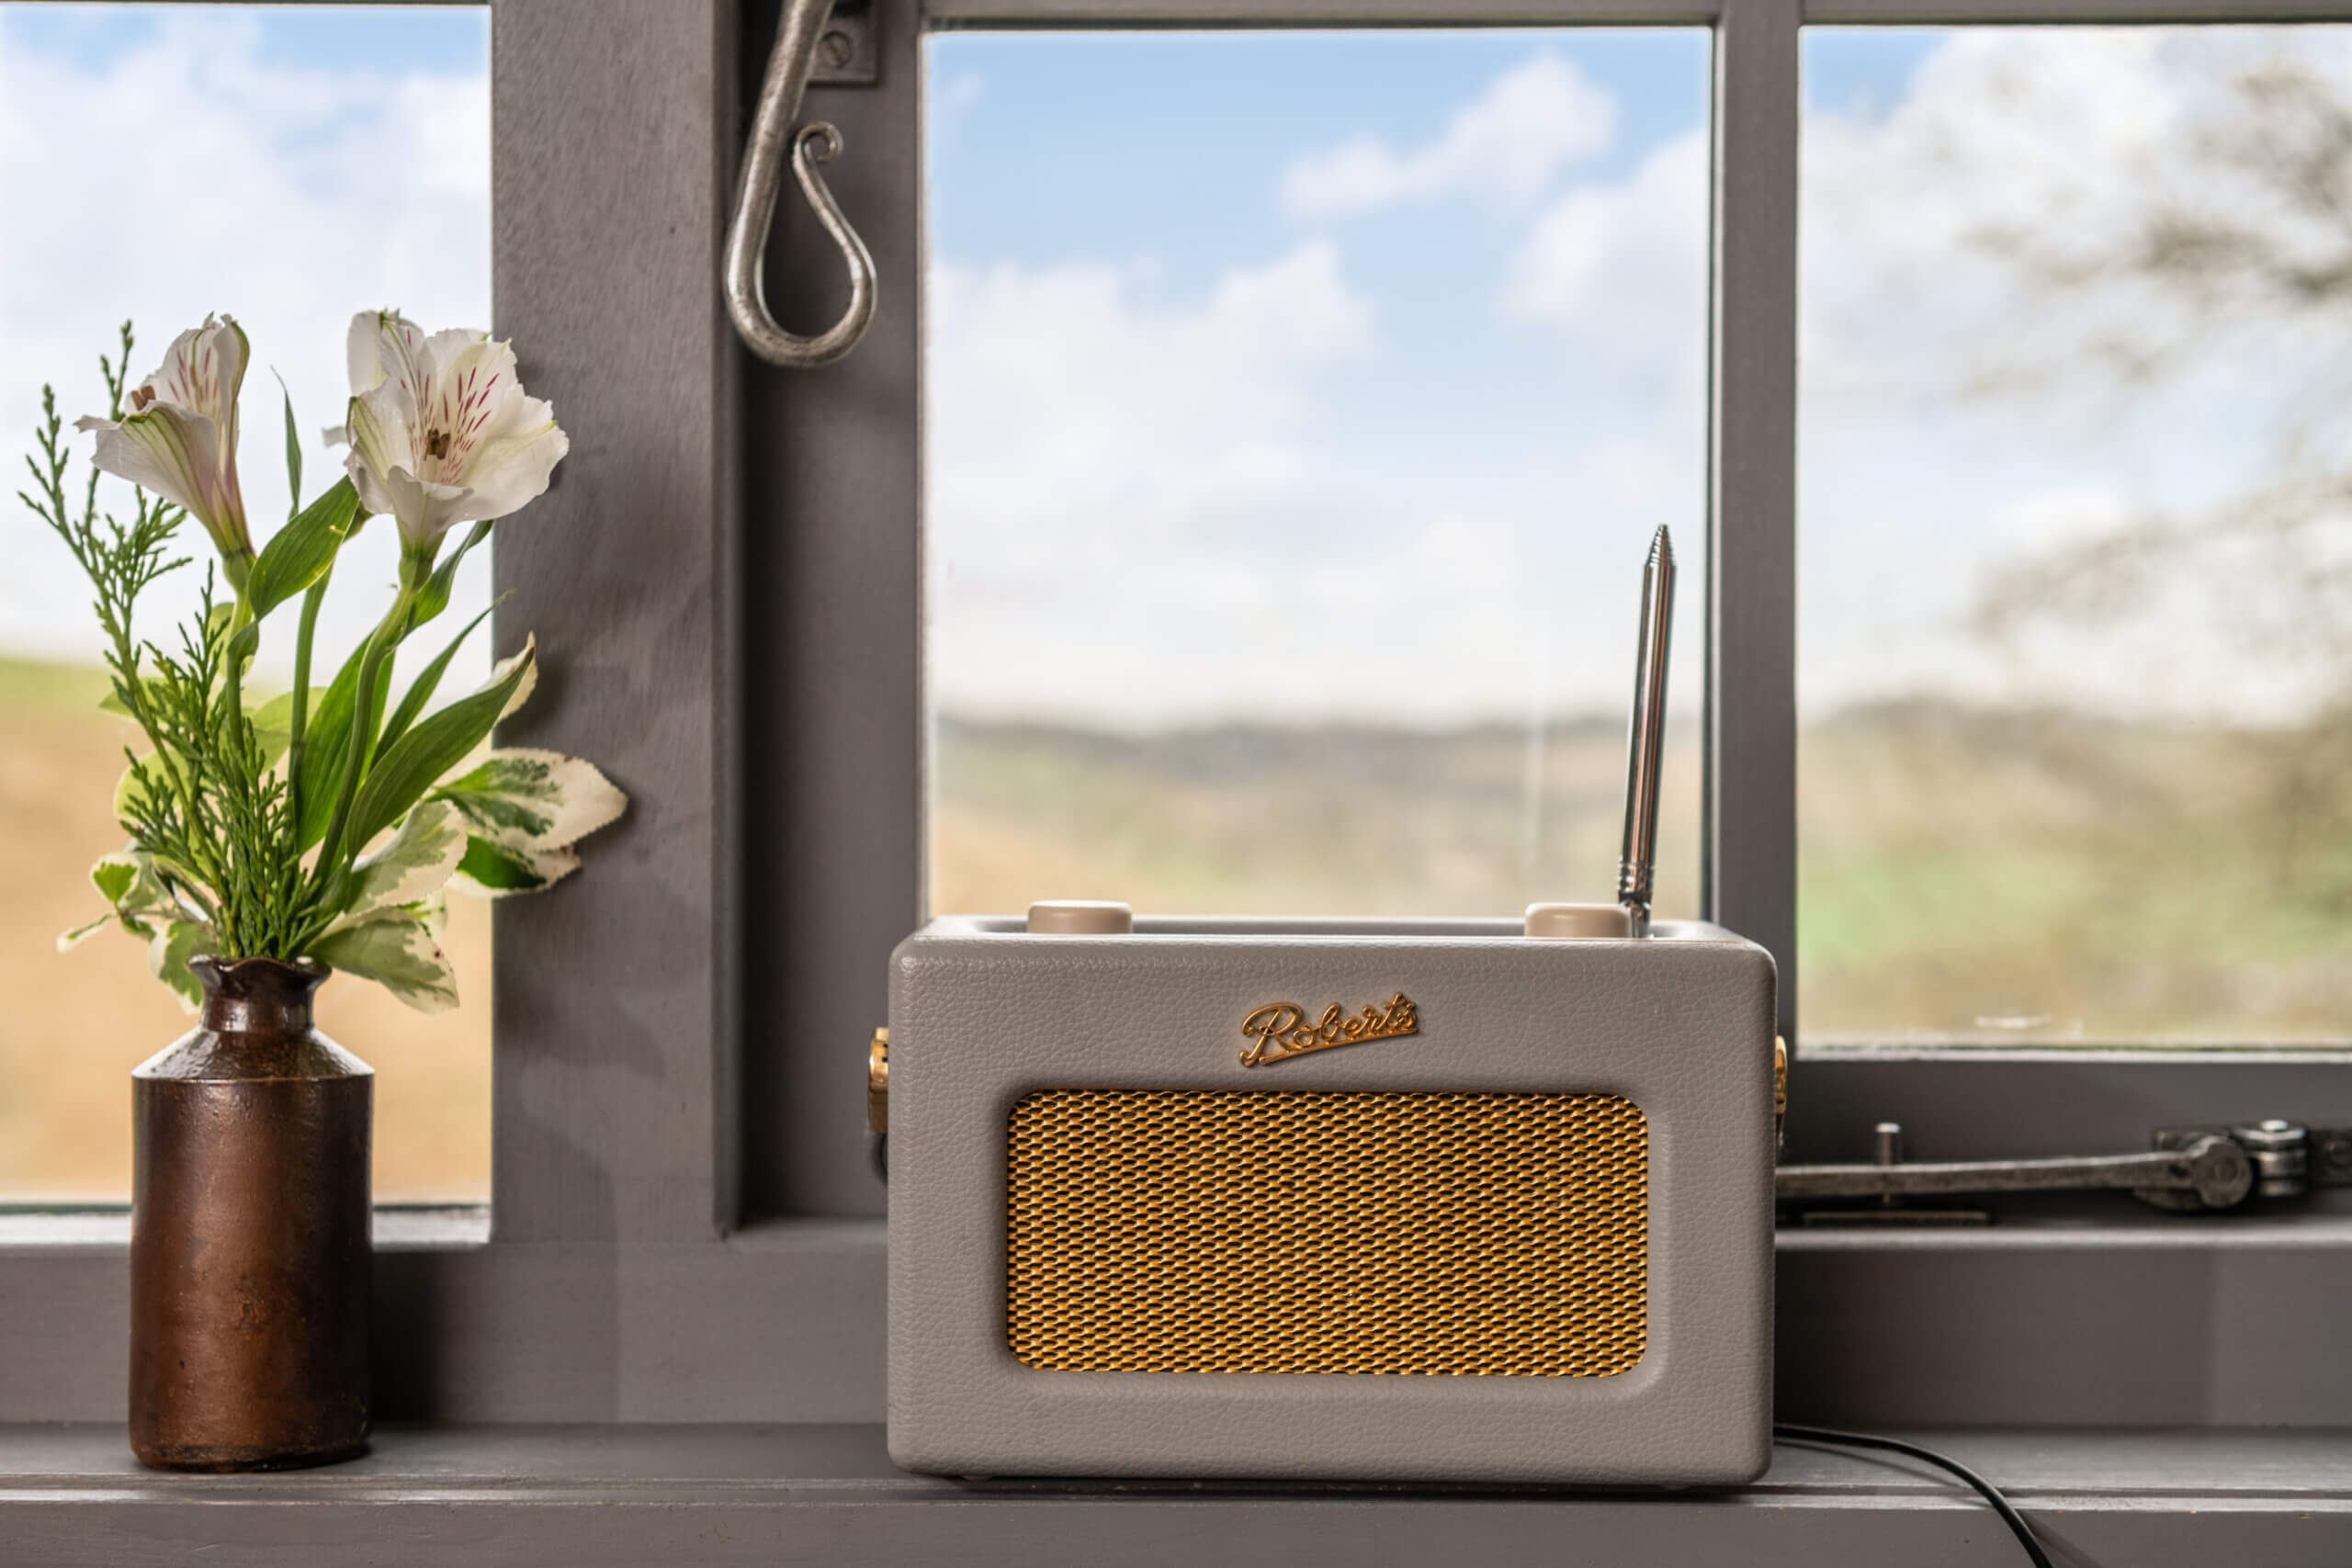 Radio on window shelf at Shepherds Hut